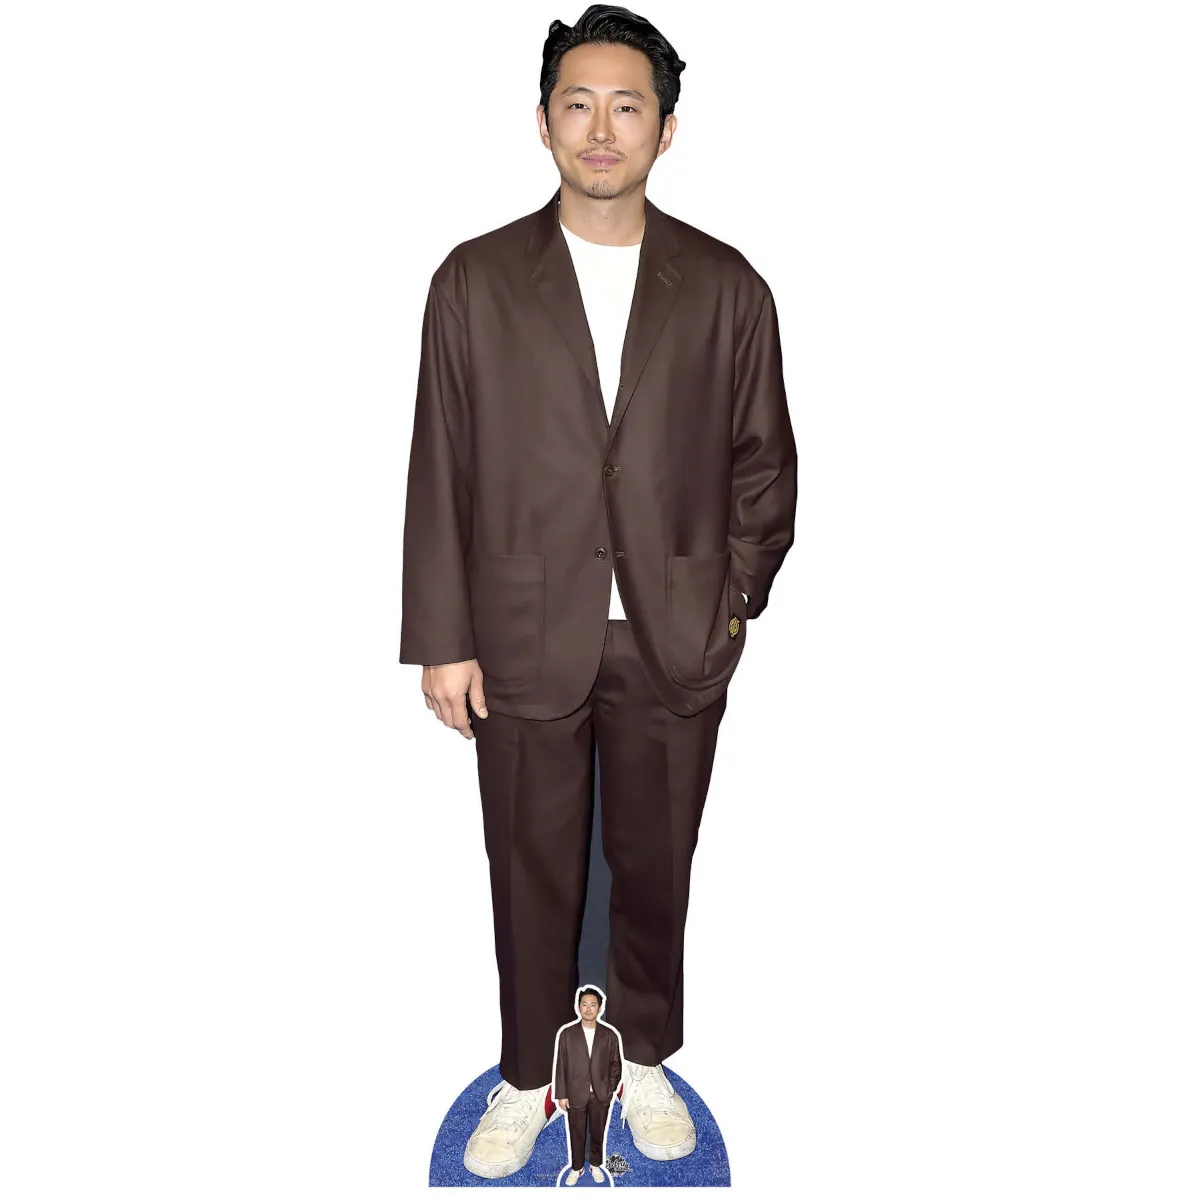 CS1060 Steven Yeun 'Brown Suit' (South Korean American Actor) Lifesize + Mini Cardboard Cutout Standee Front